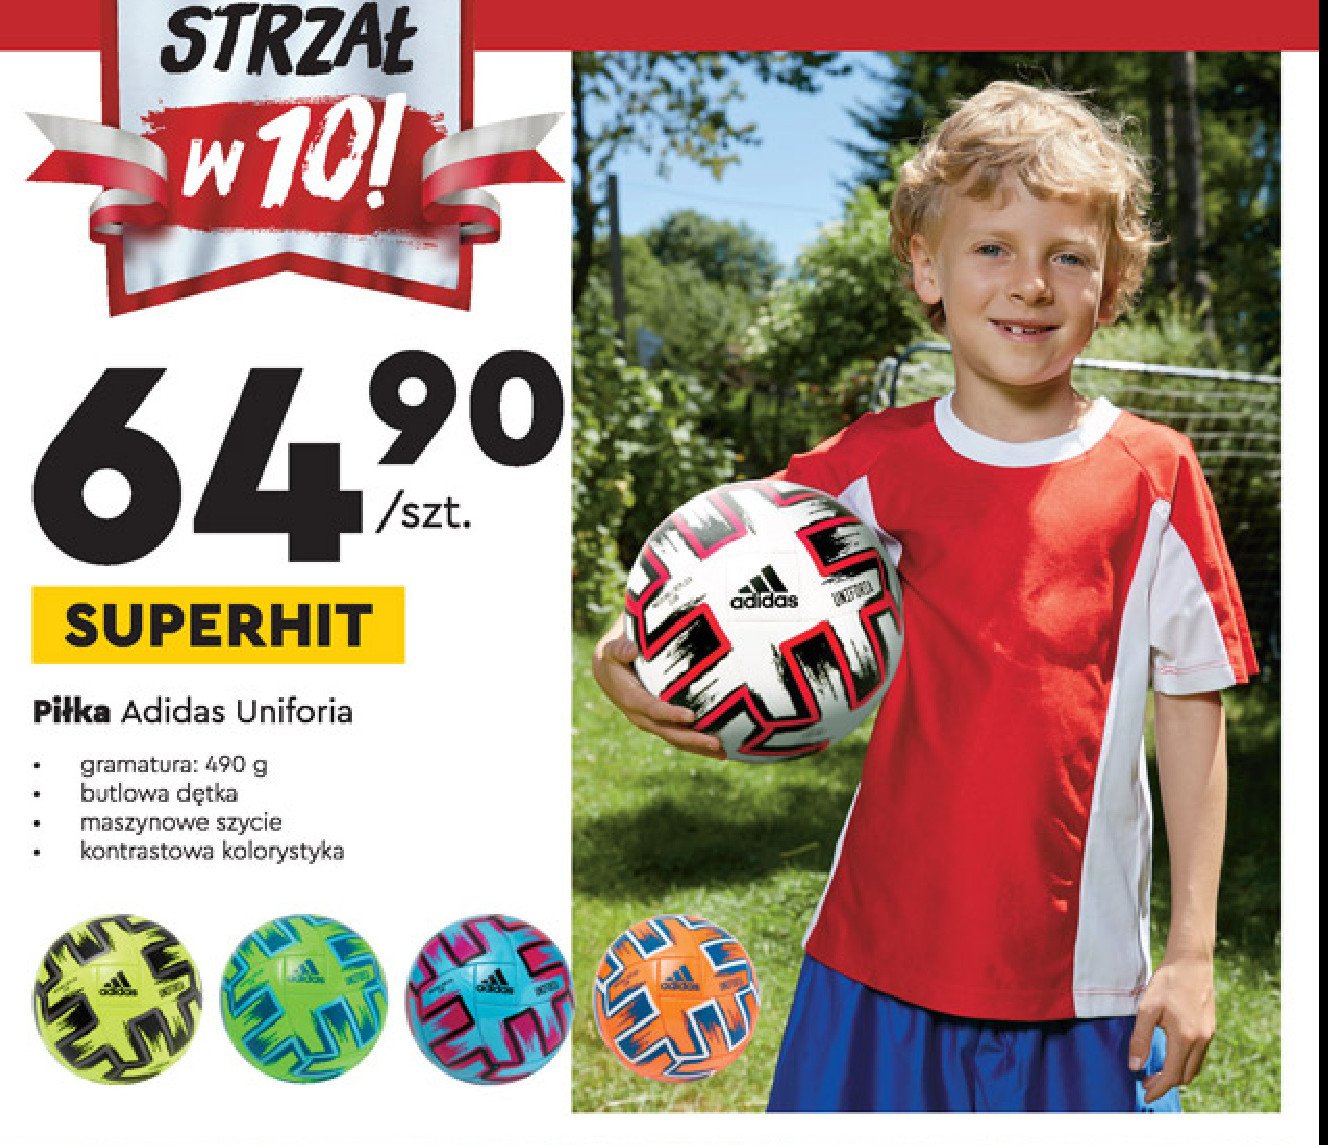 Piłka uniforia Adidas promocja